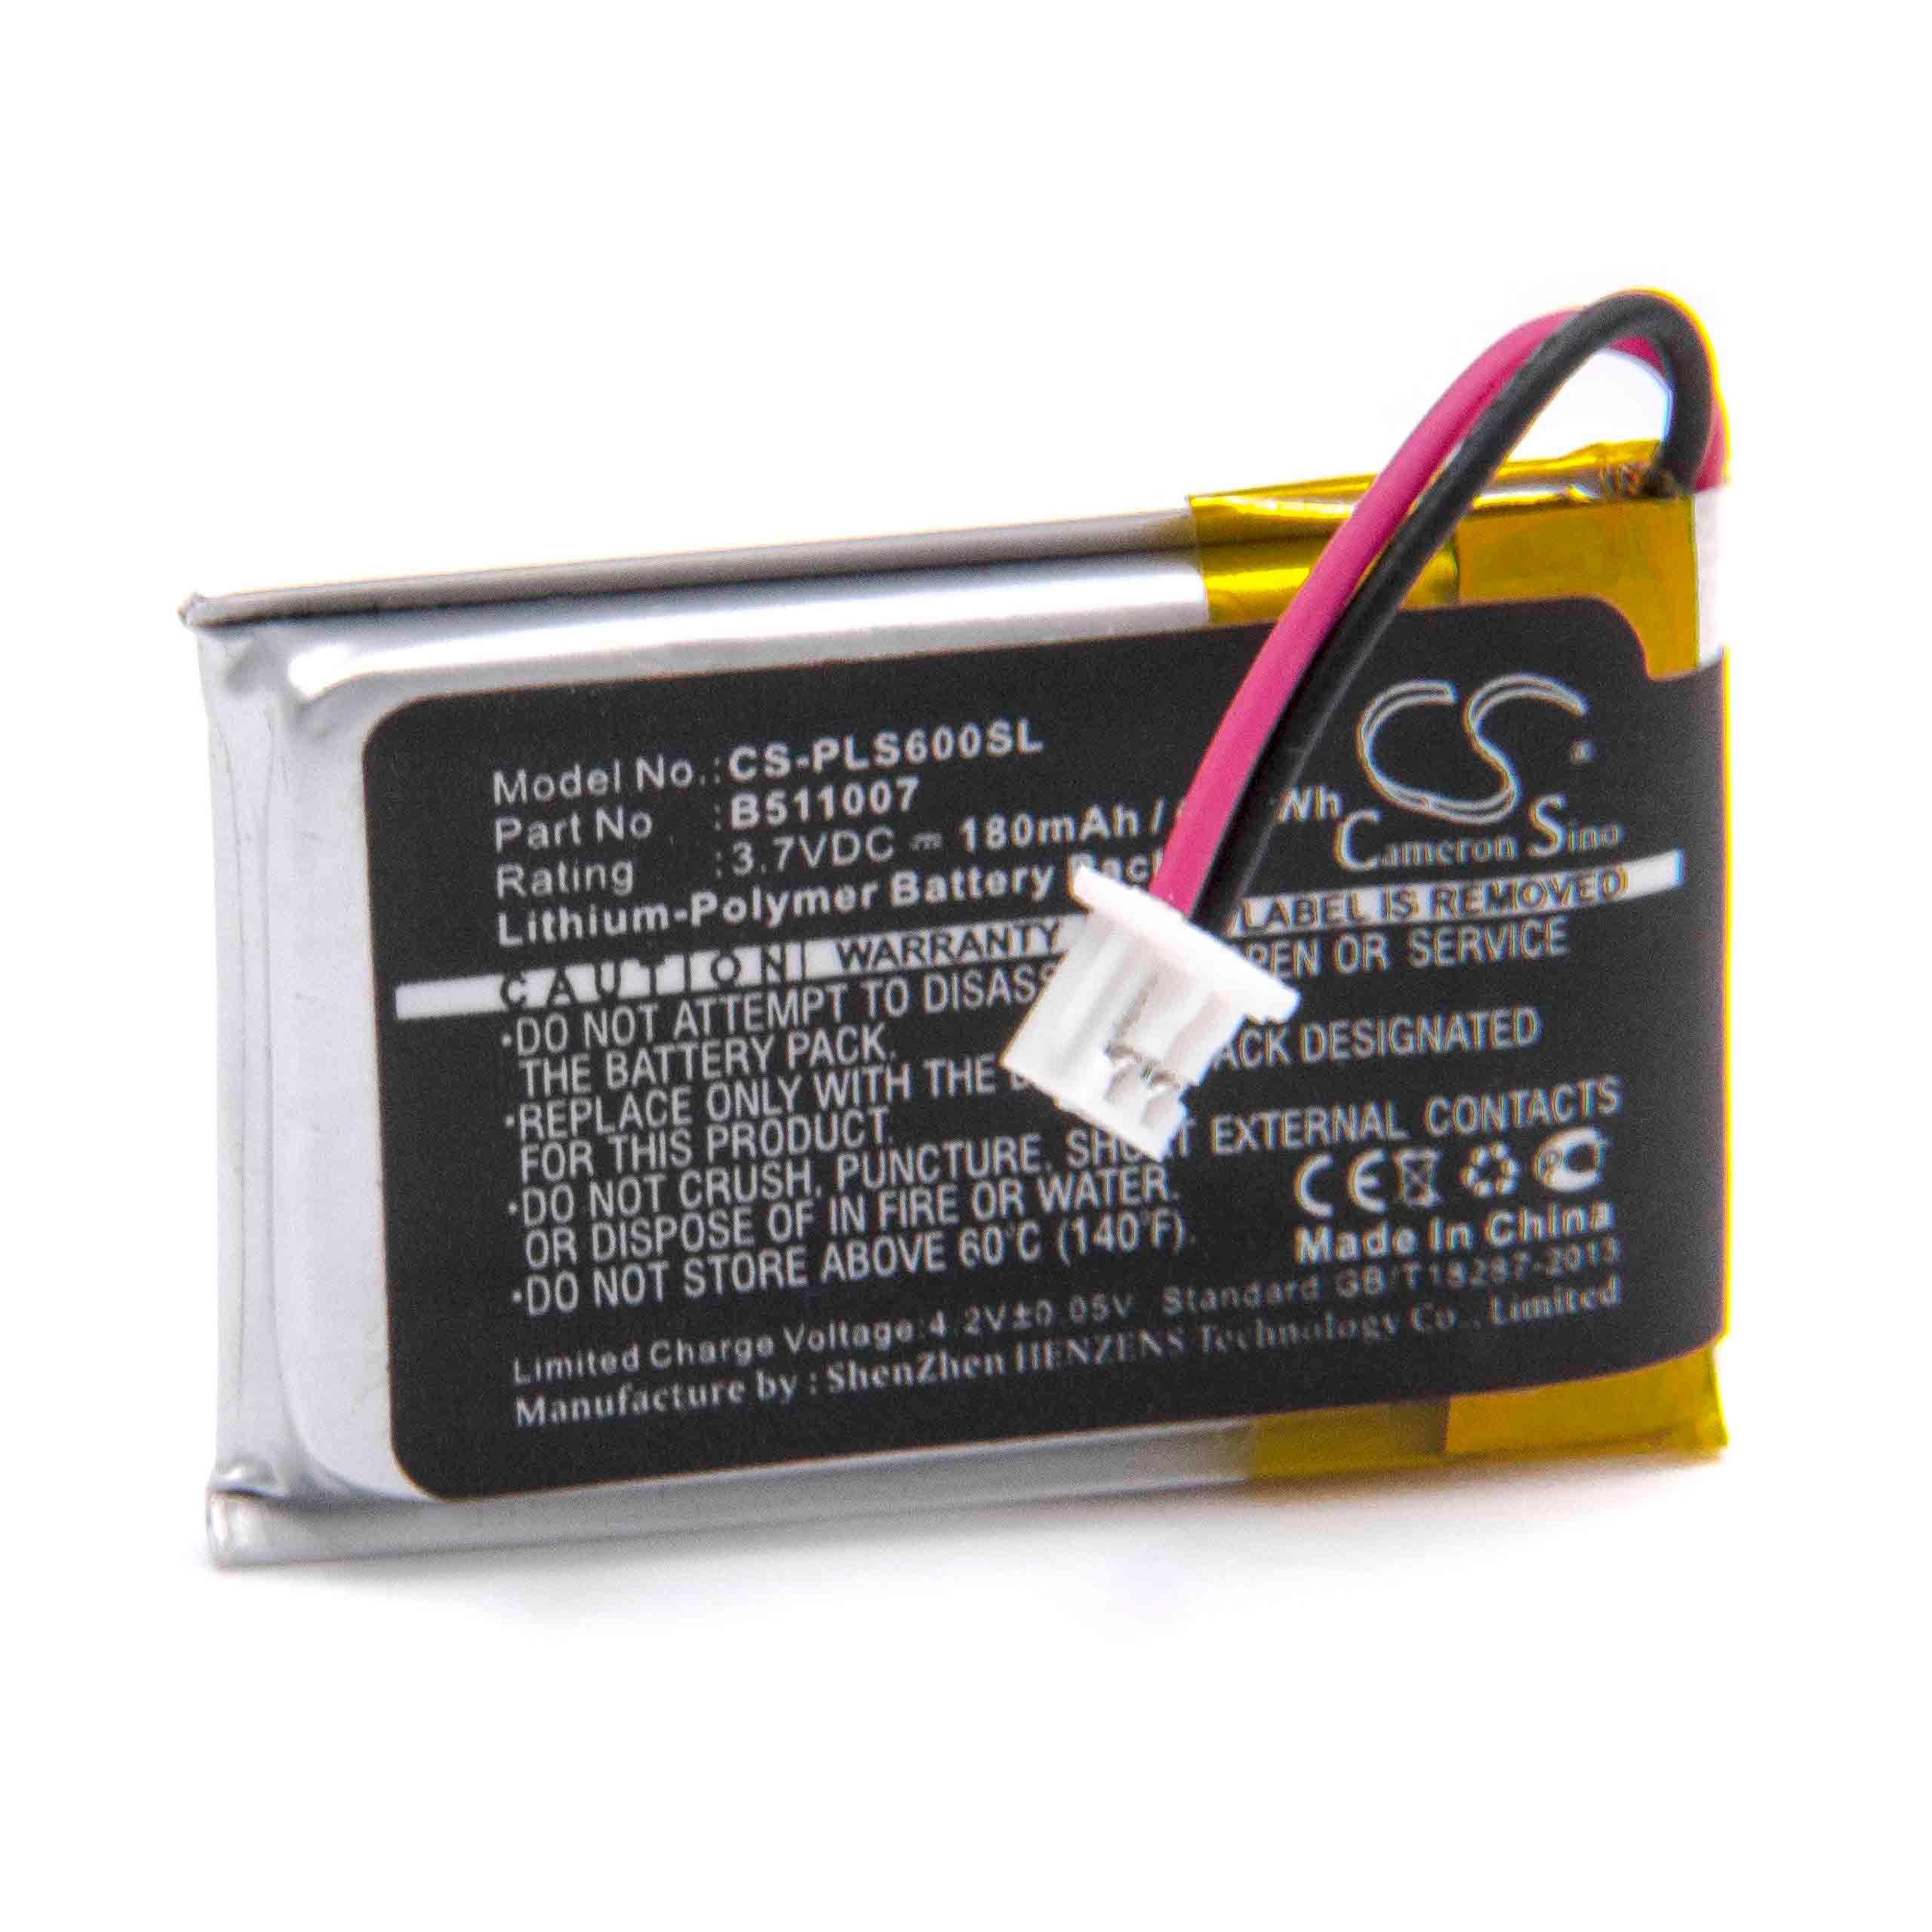 Wireless Headset Battery Replacement for Plantronics 452128, 6535801, B511007 - 180mAh 3.7V Li-polymer